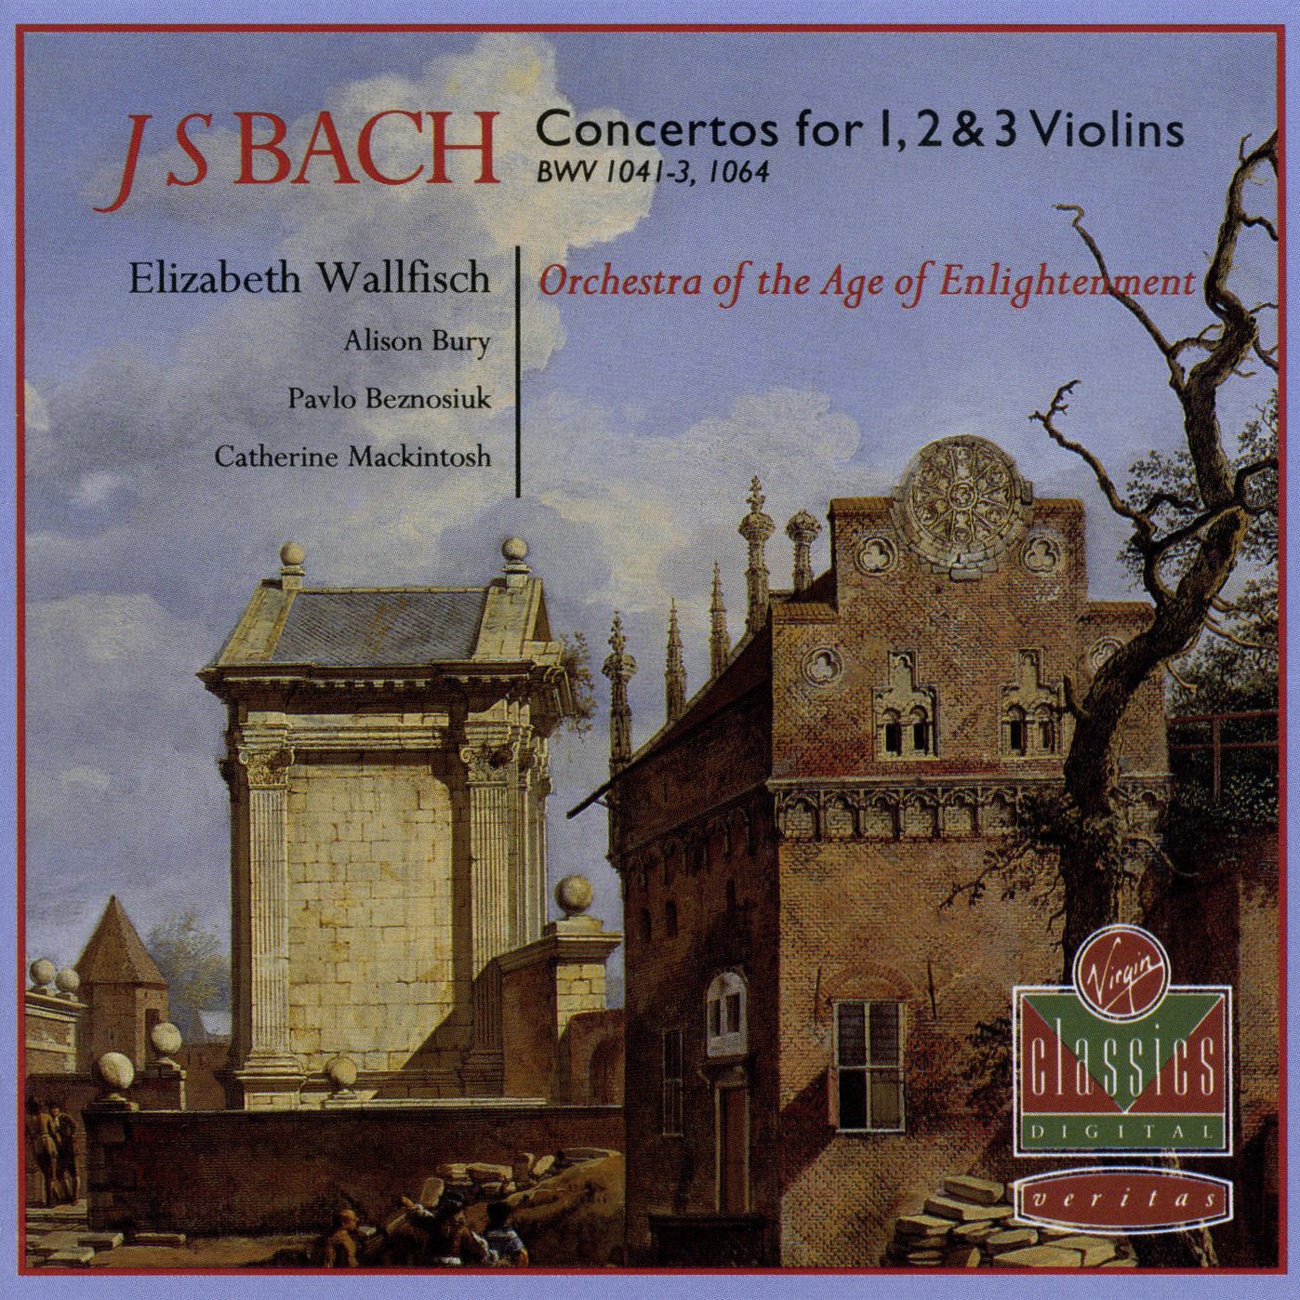 Double Violin Concerto in D minor BWV1043: III.     Allegro